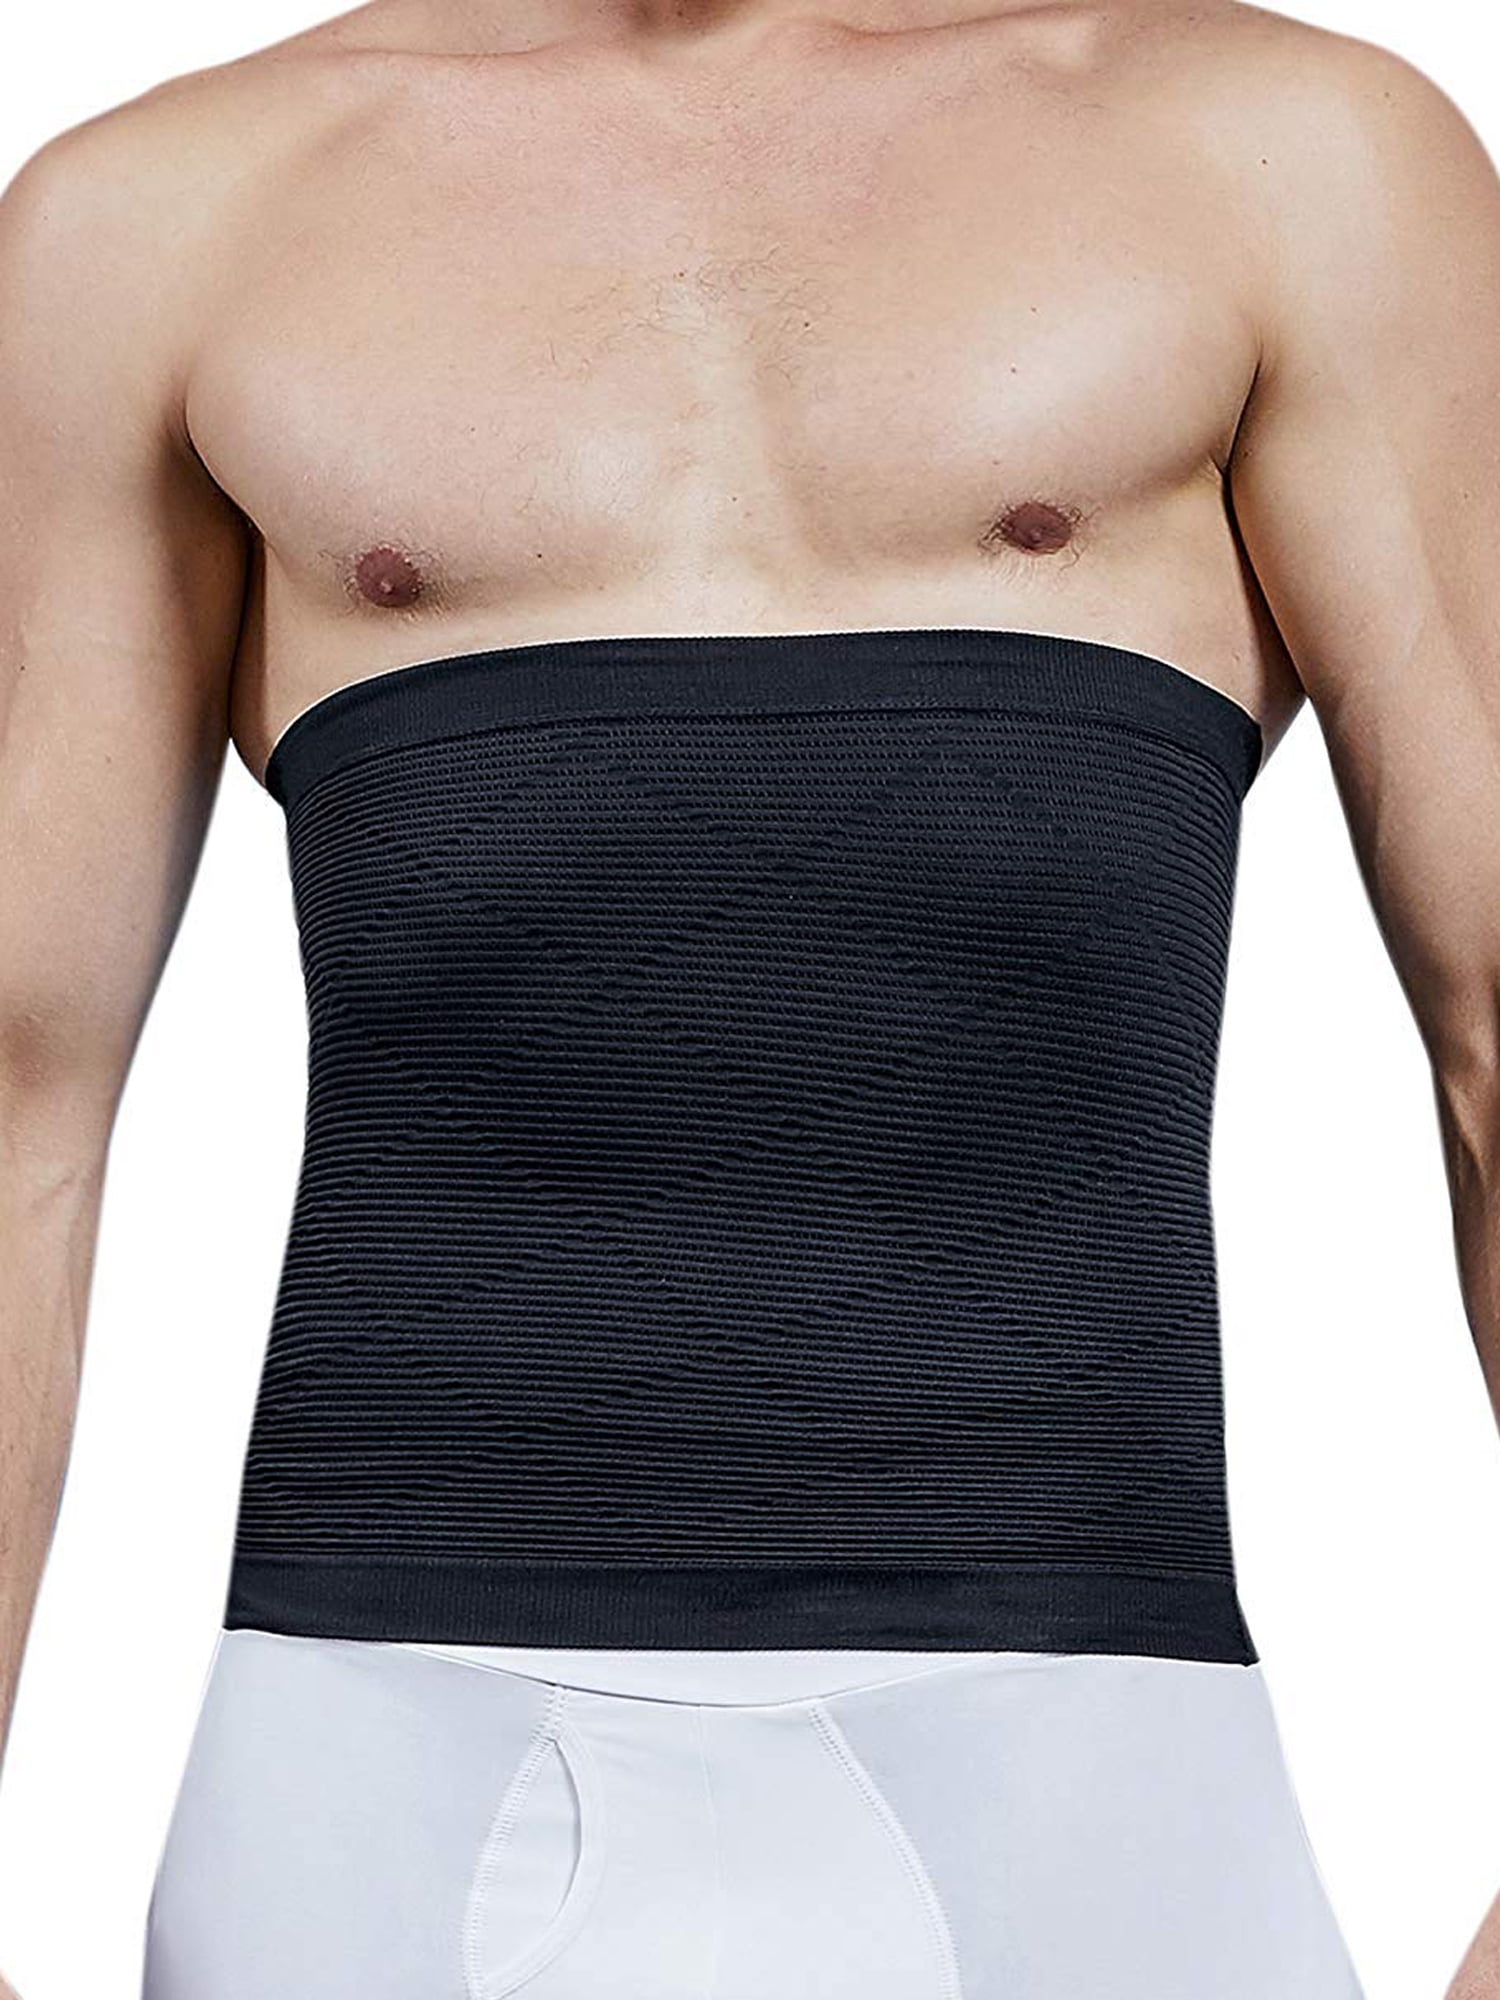 Men Support Wasit Cincher Belly Slimming Body Shaper Compression Shapewear Belt 